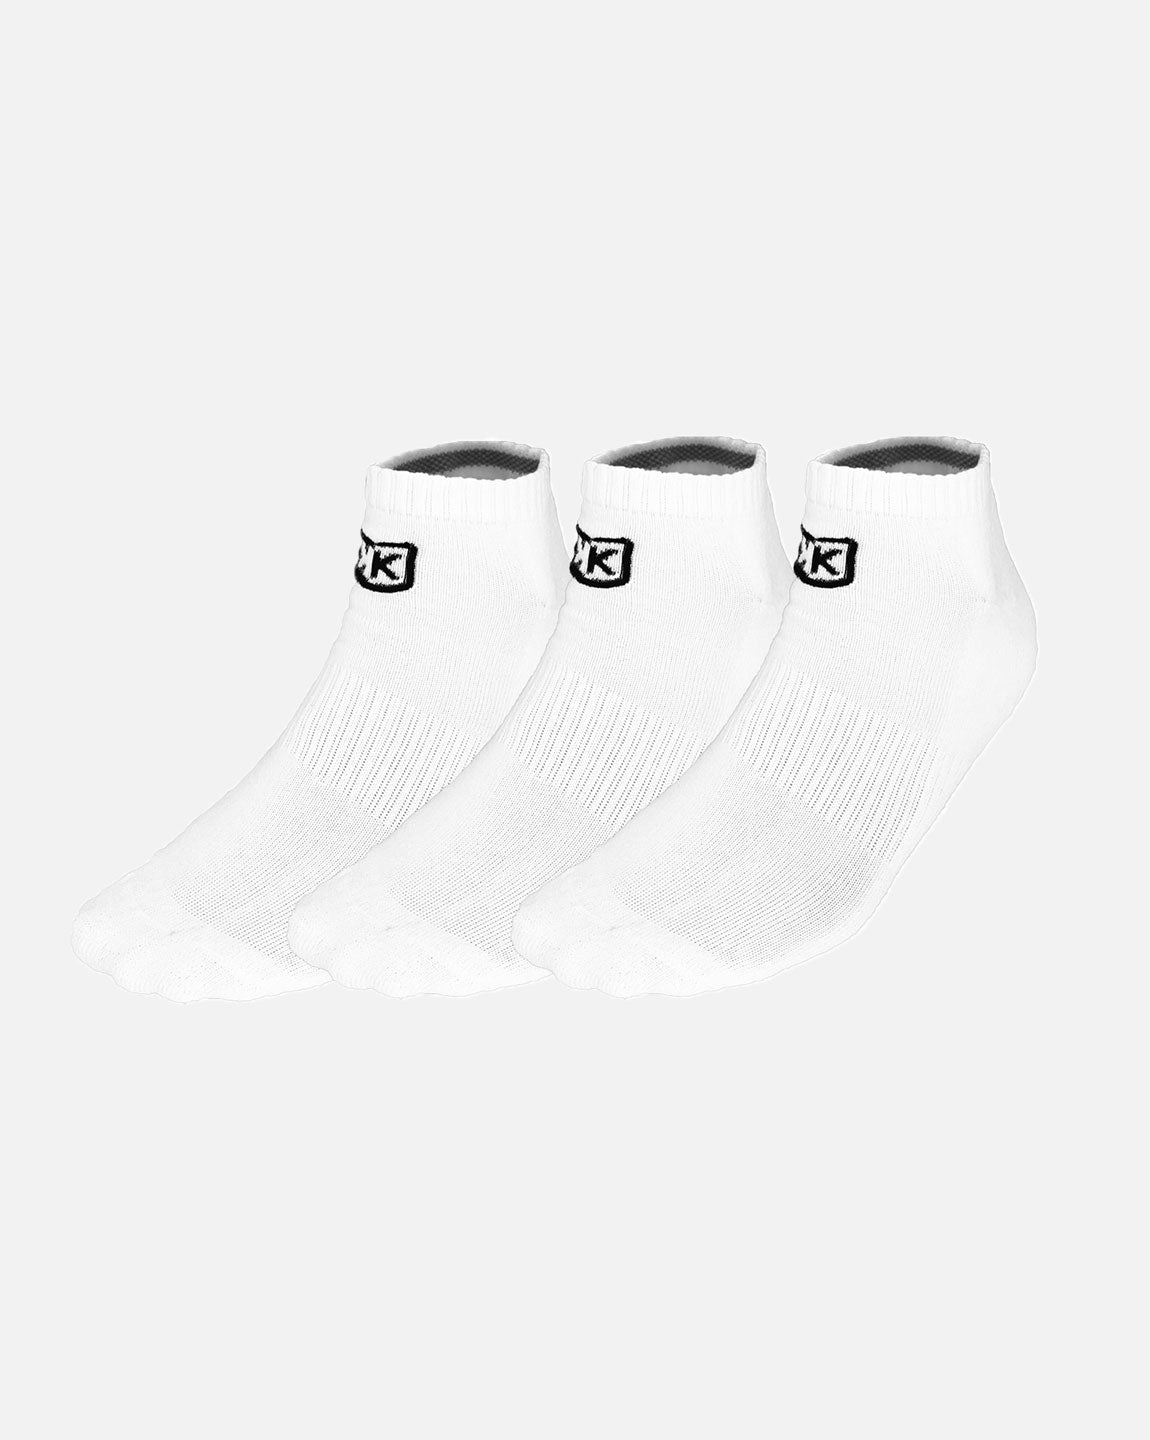 Packung mit 3 Paar kurzen FK-Socken – Weiß – Footkorner | Lange Socken